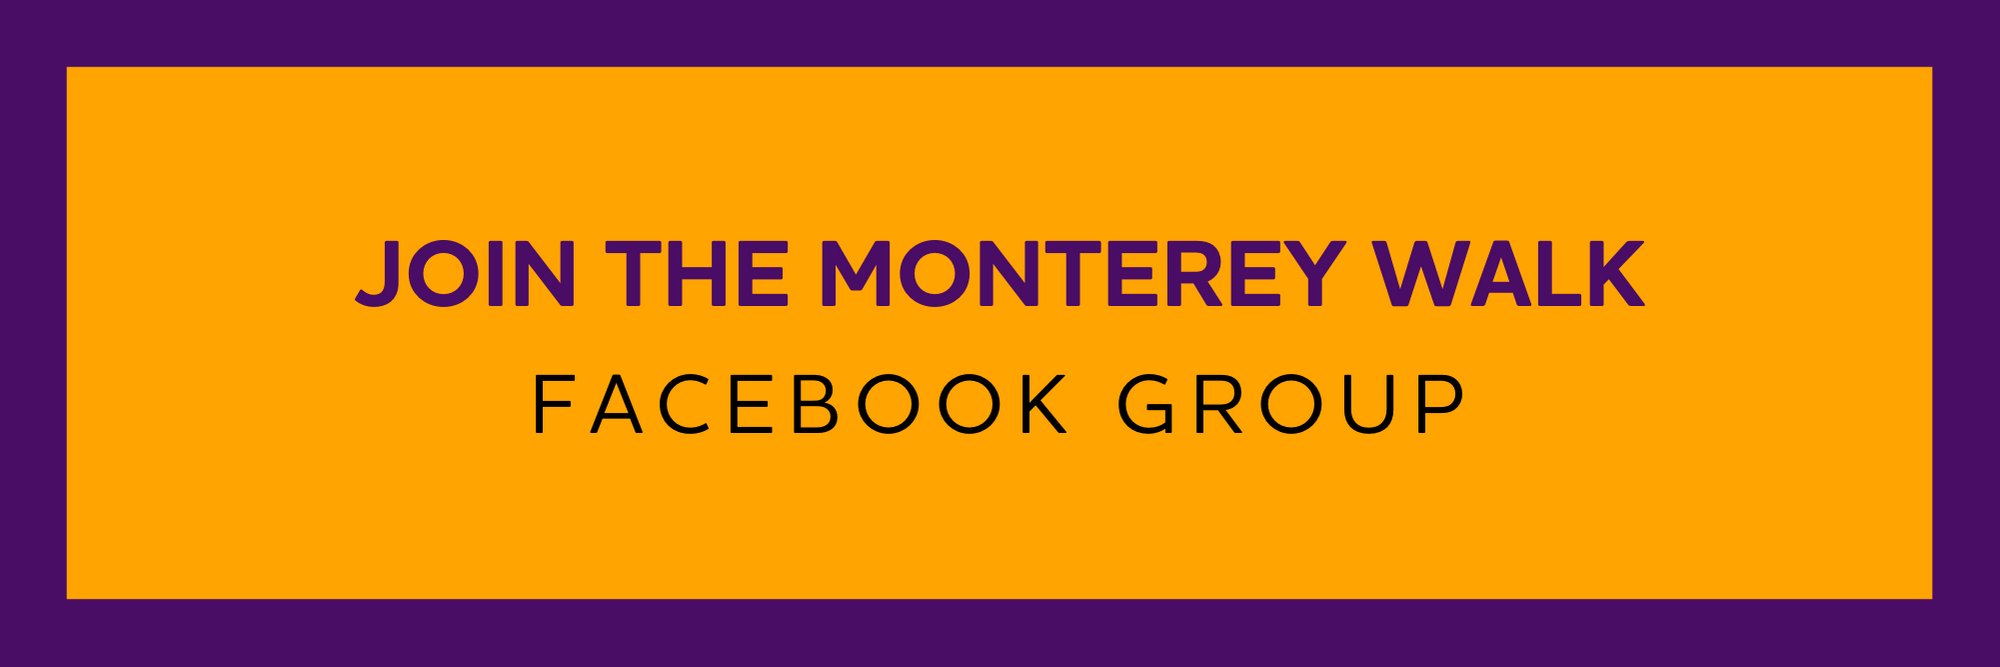 Monterey walk facebook group button